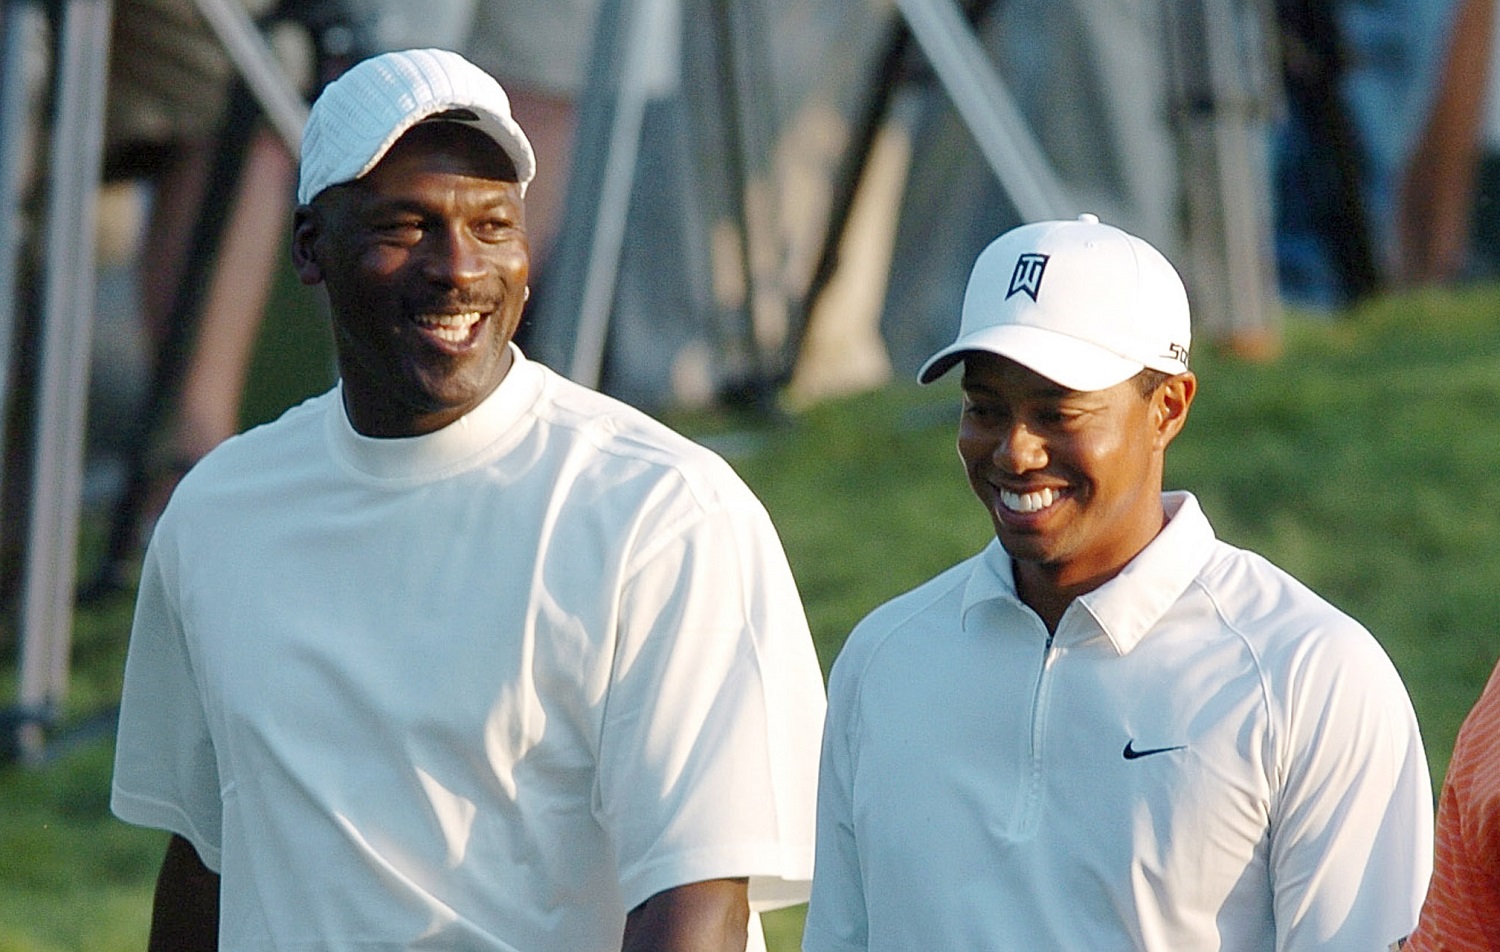 Michael Jordan's Gloating Message to Tiger Woods: 'I Don't Take Checks'